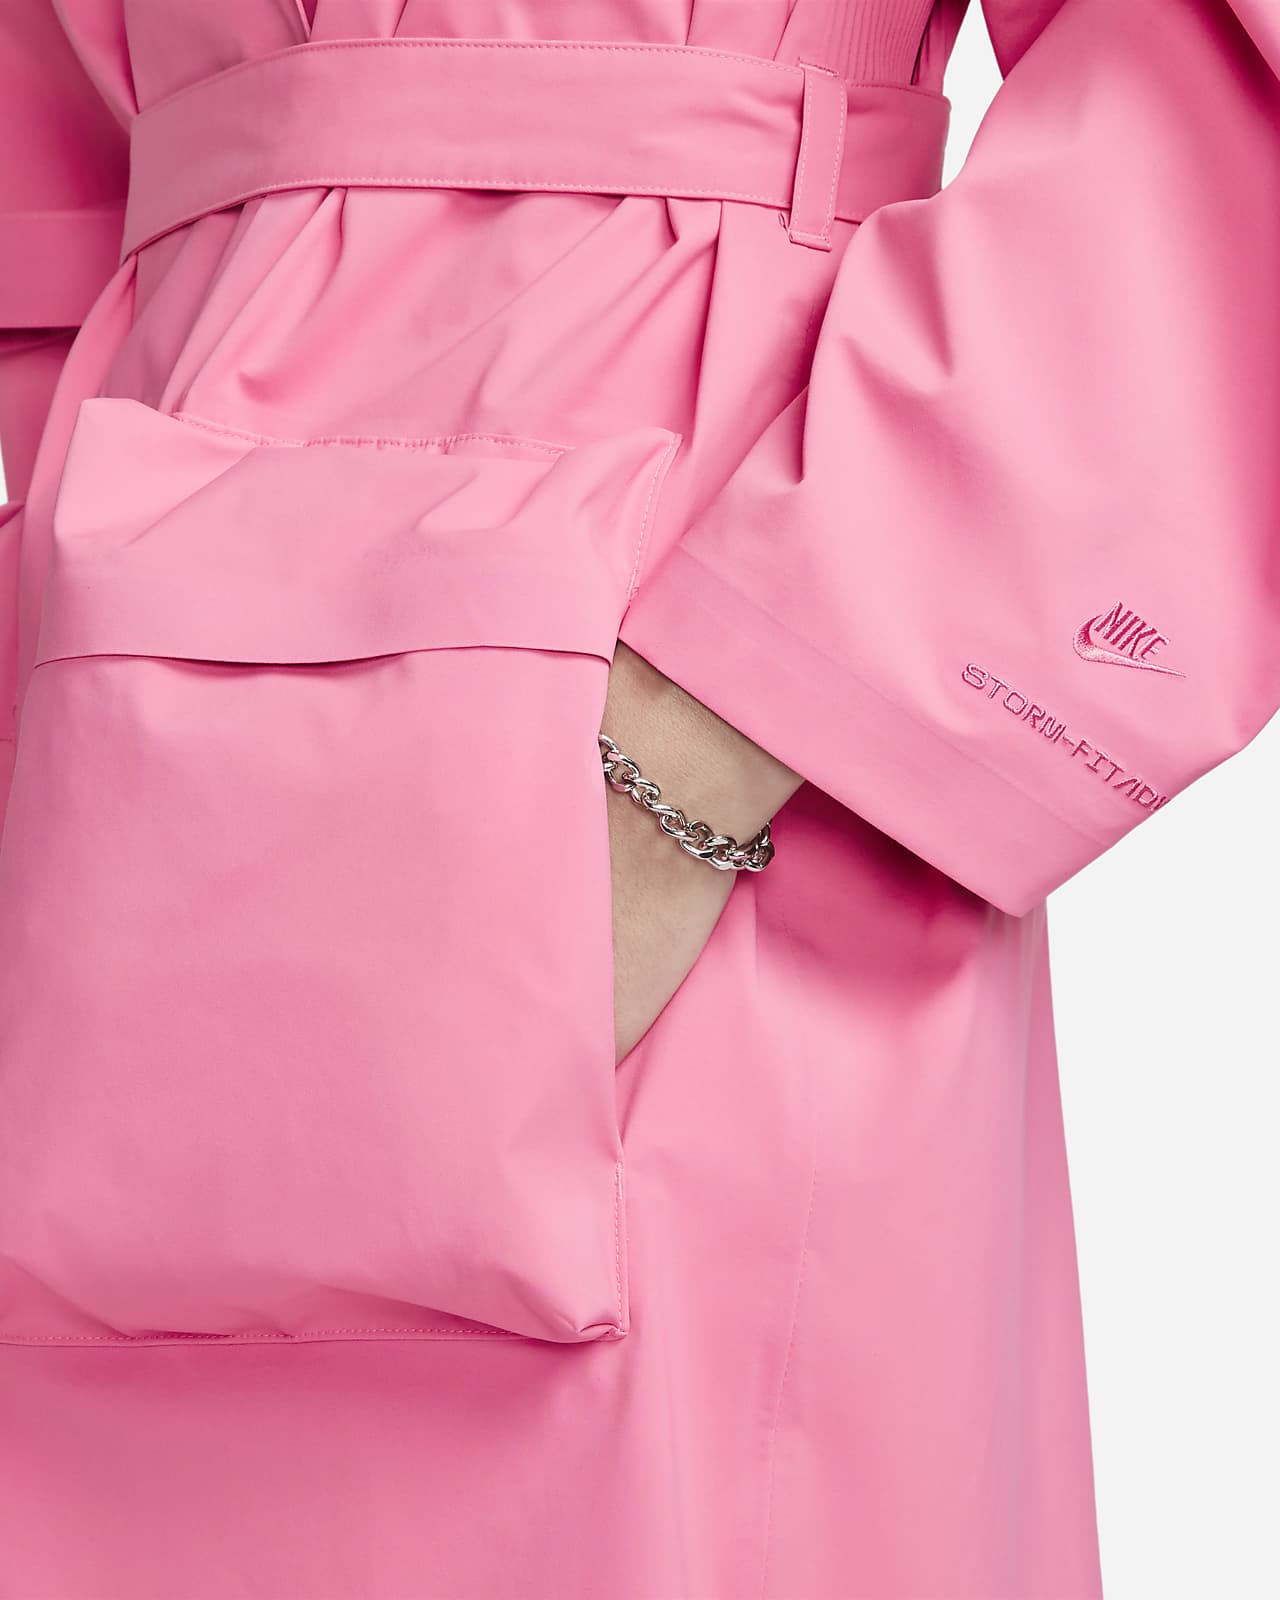 Nike W NSW Wr Dwn Fill JKT Rev Coats Women Pink - XS - Duffel